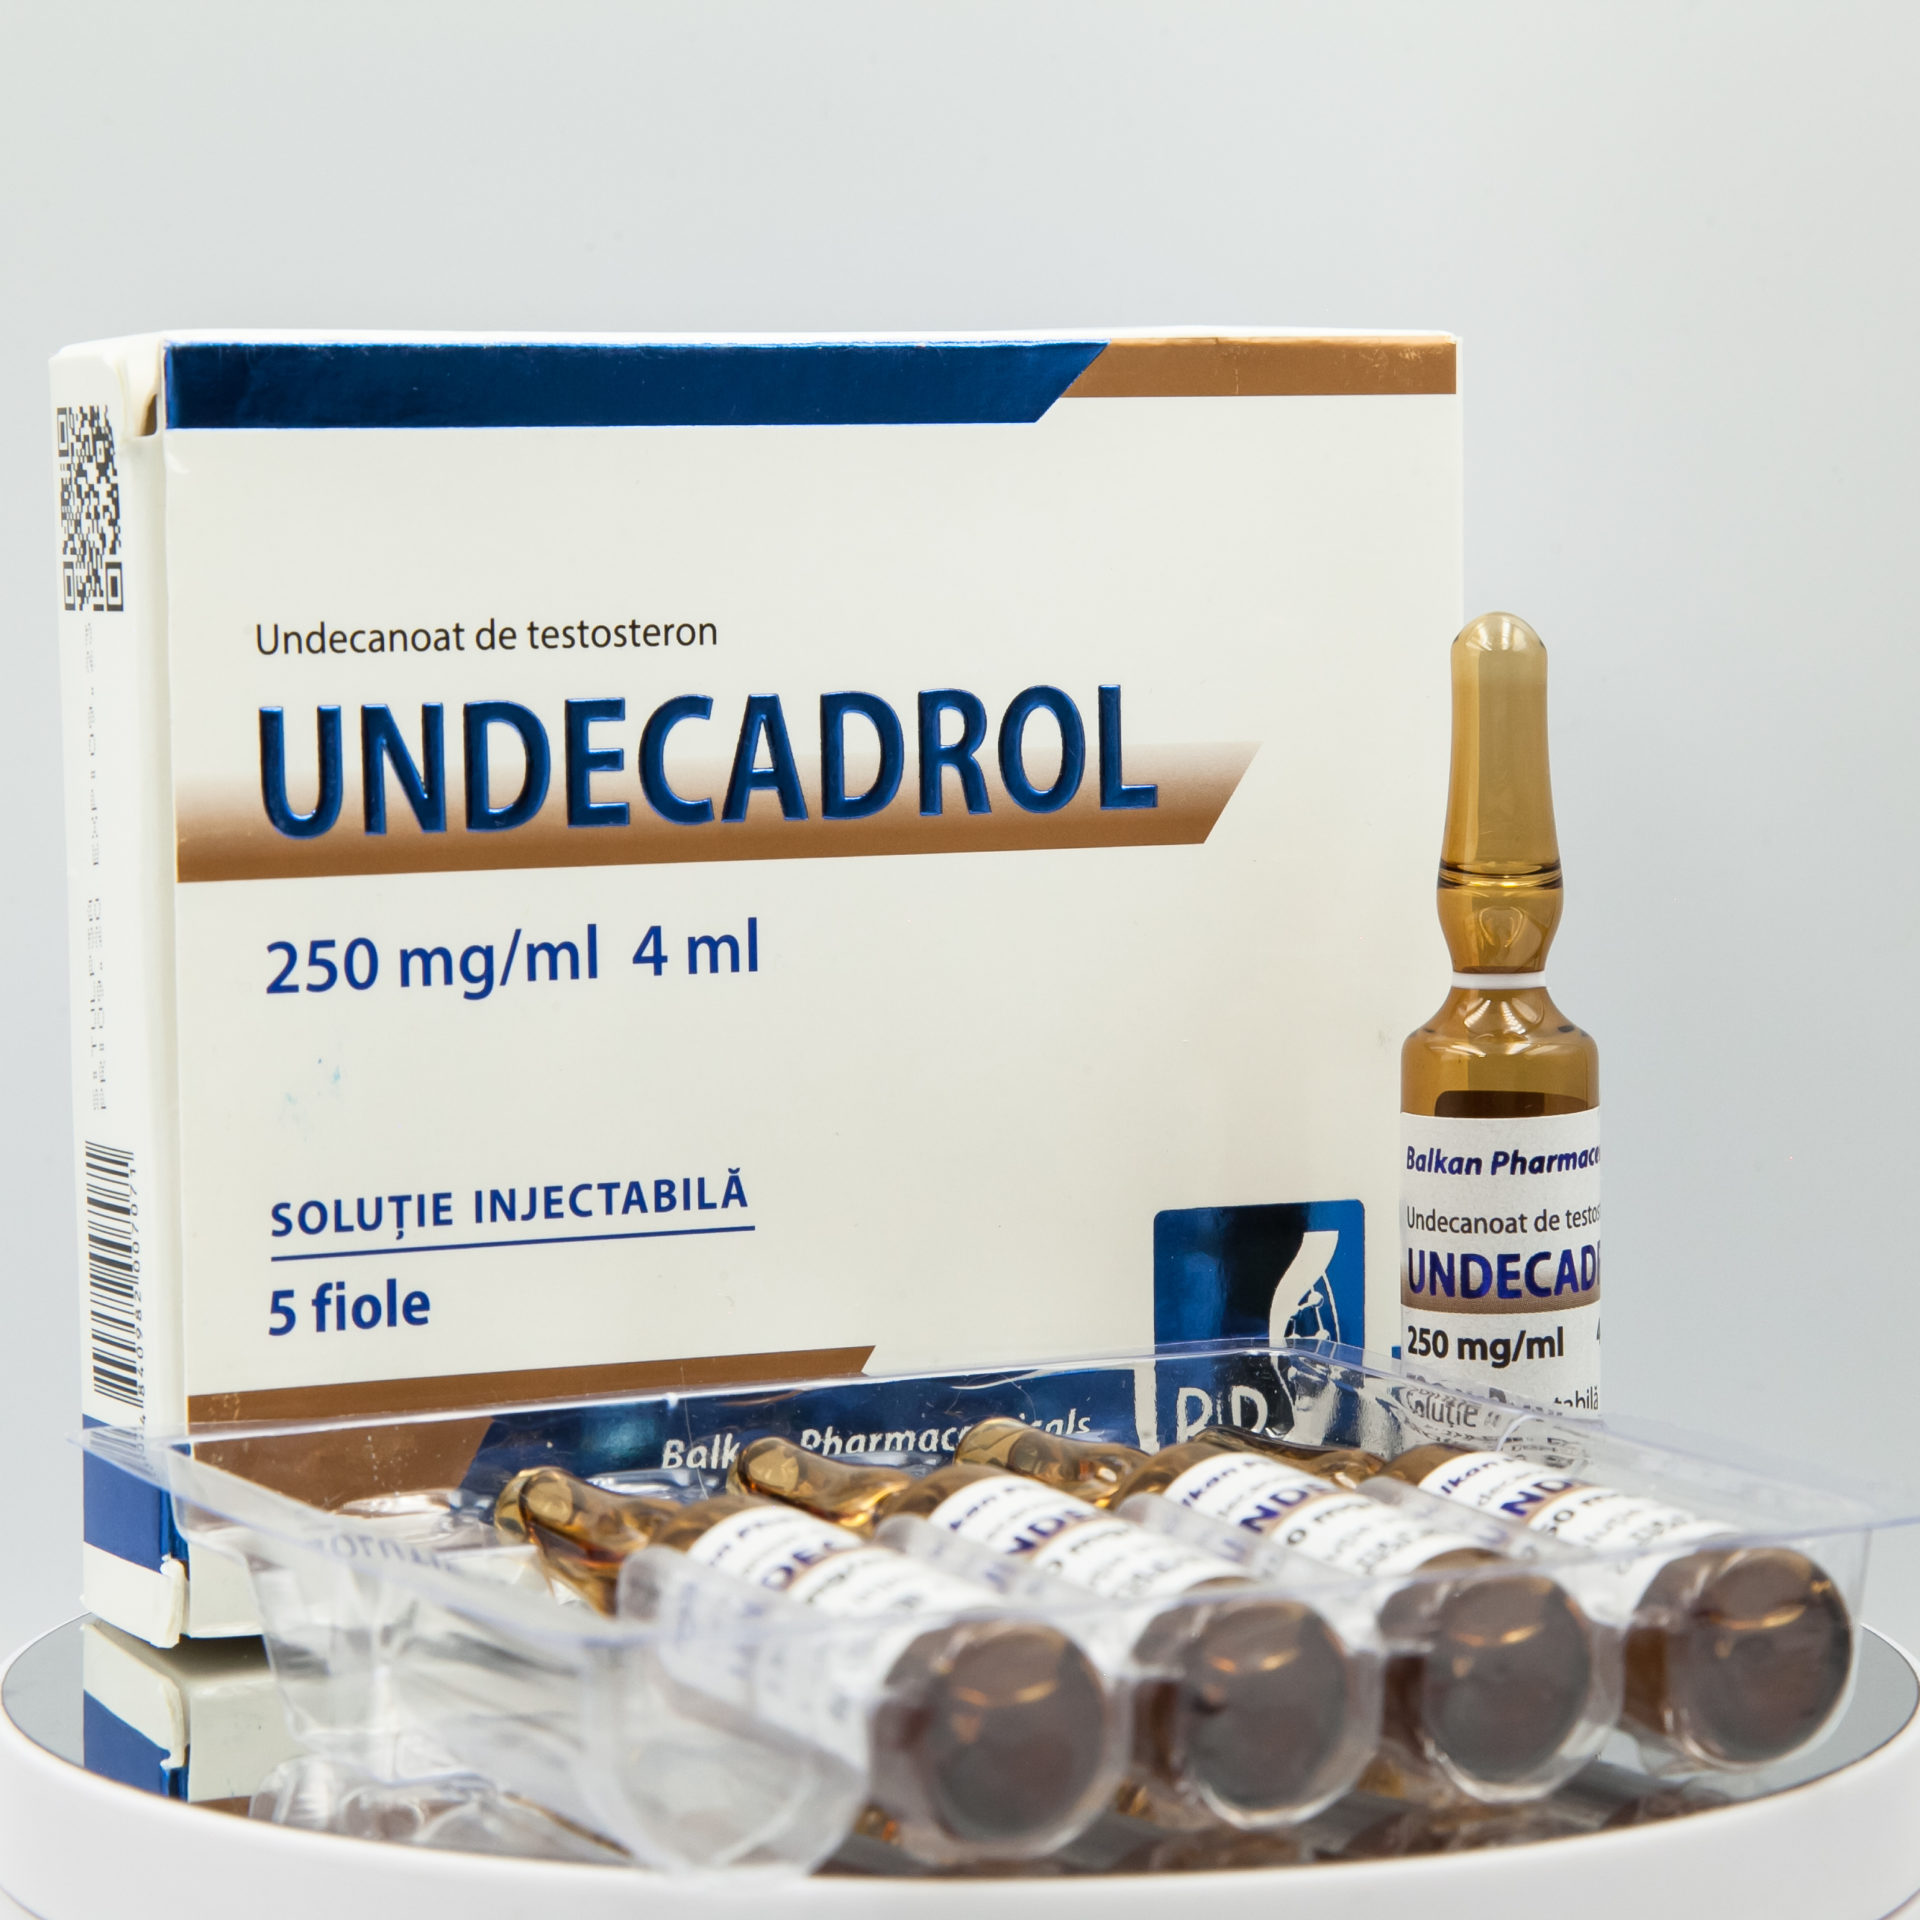 Undecadrol (Testosteron U) 250 mg Balkan Pharmaceuticals Iniezione di steroidi 5